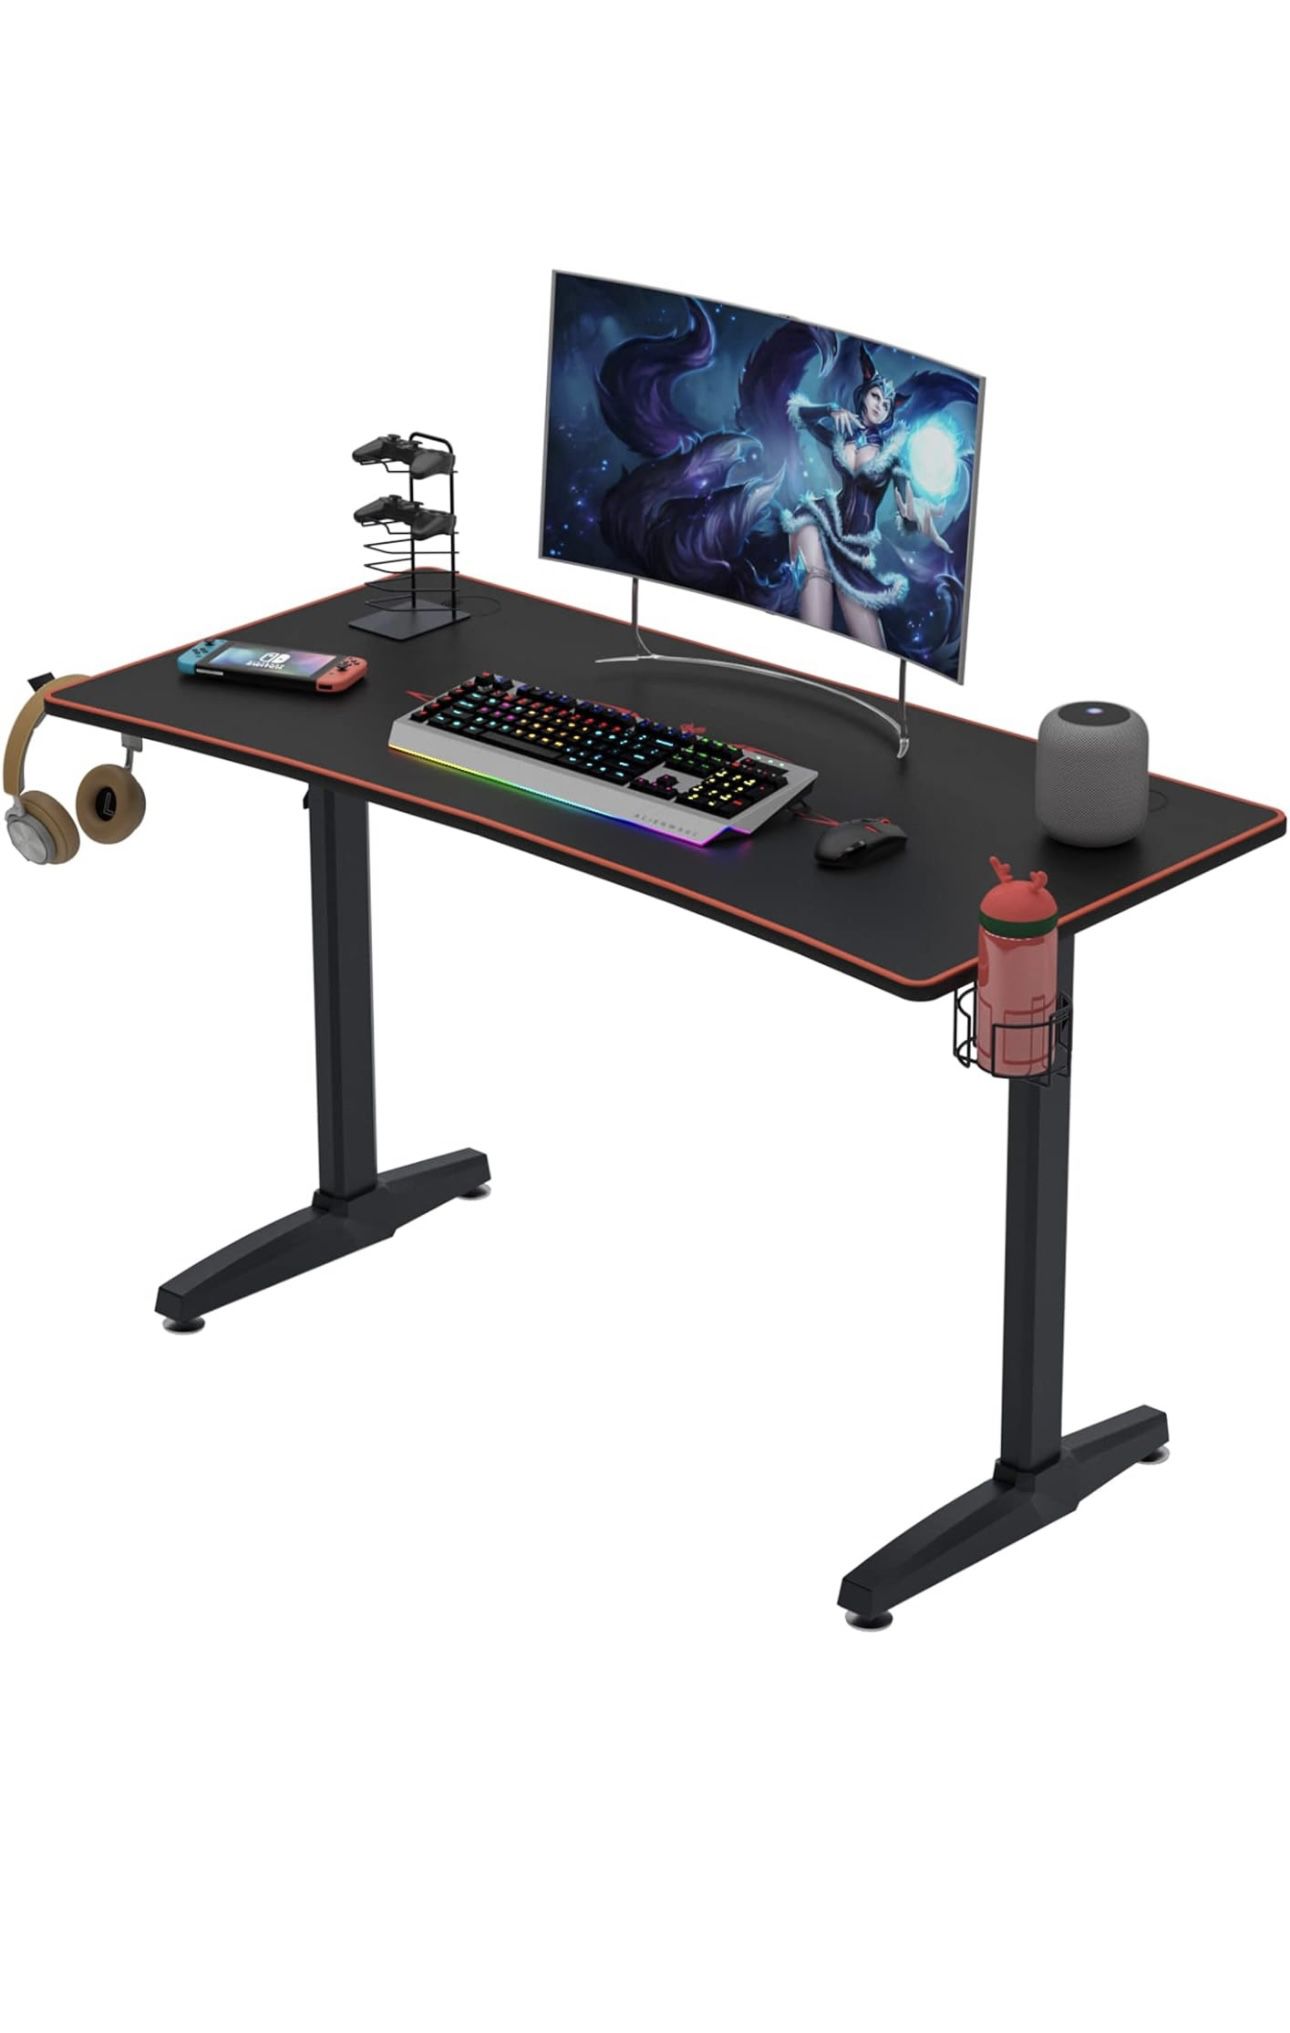 Gaming Desk, 47 inch Computer Desk, Professional Gamer Game Station with Full Covered Mouse Pad, Headphone Hook, Gamer Handle Rack, Cup Holder, Black